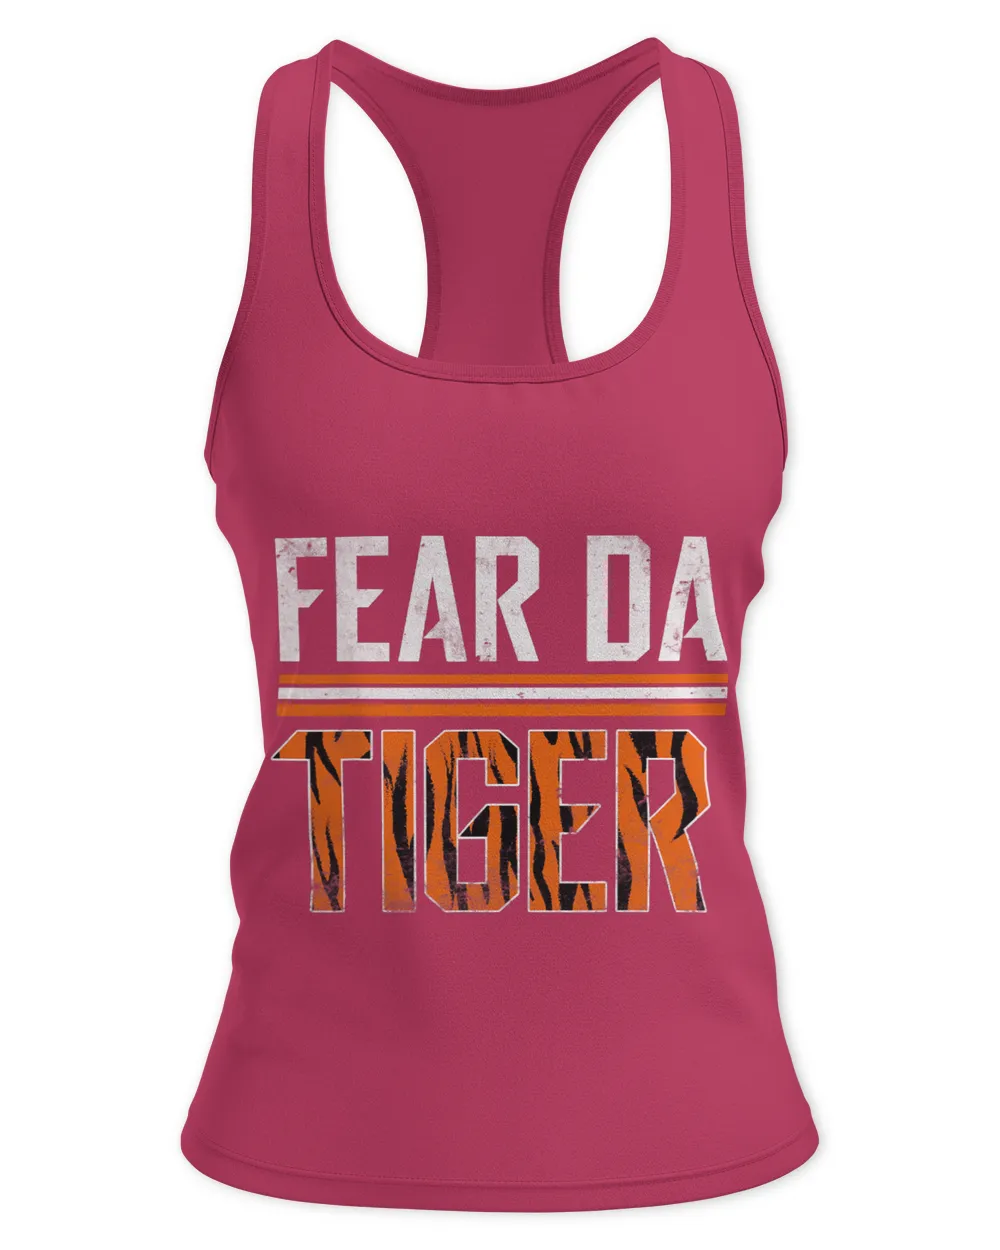 Tiger Gift Fear Da Tiger